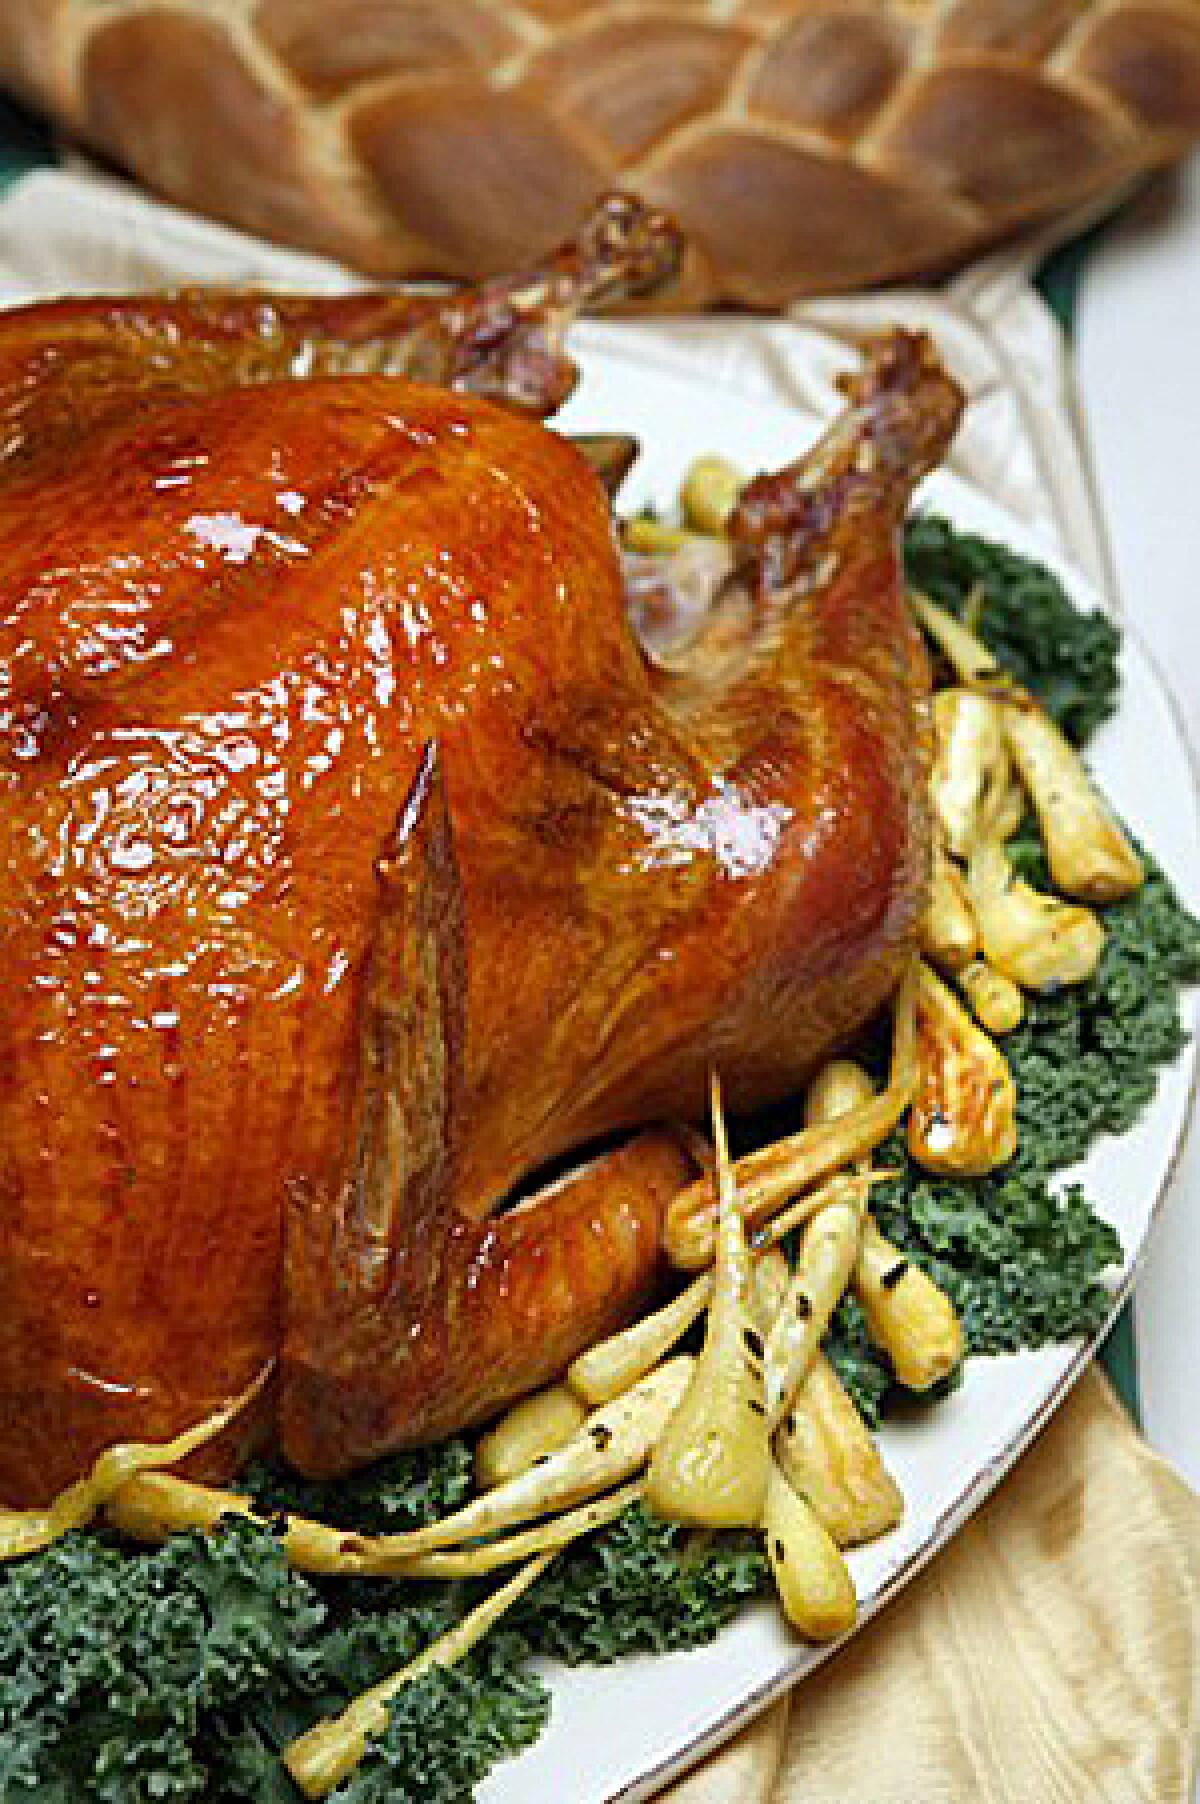 Roasted baby parsnips help set off the roasted turkey.